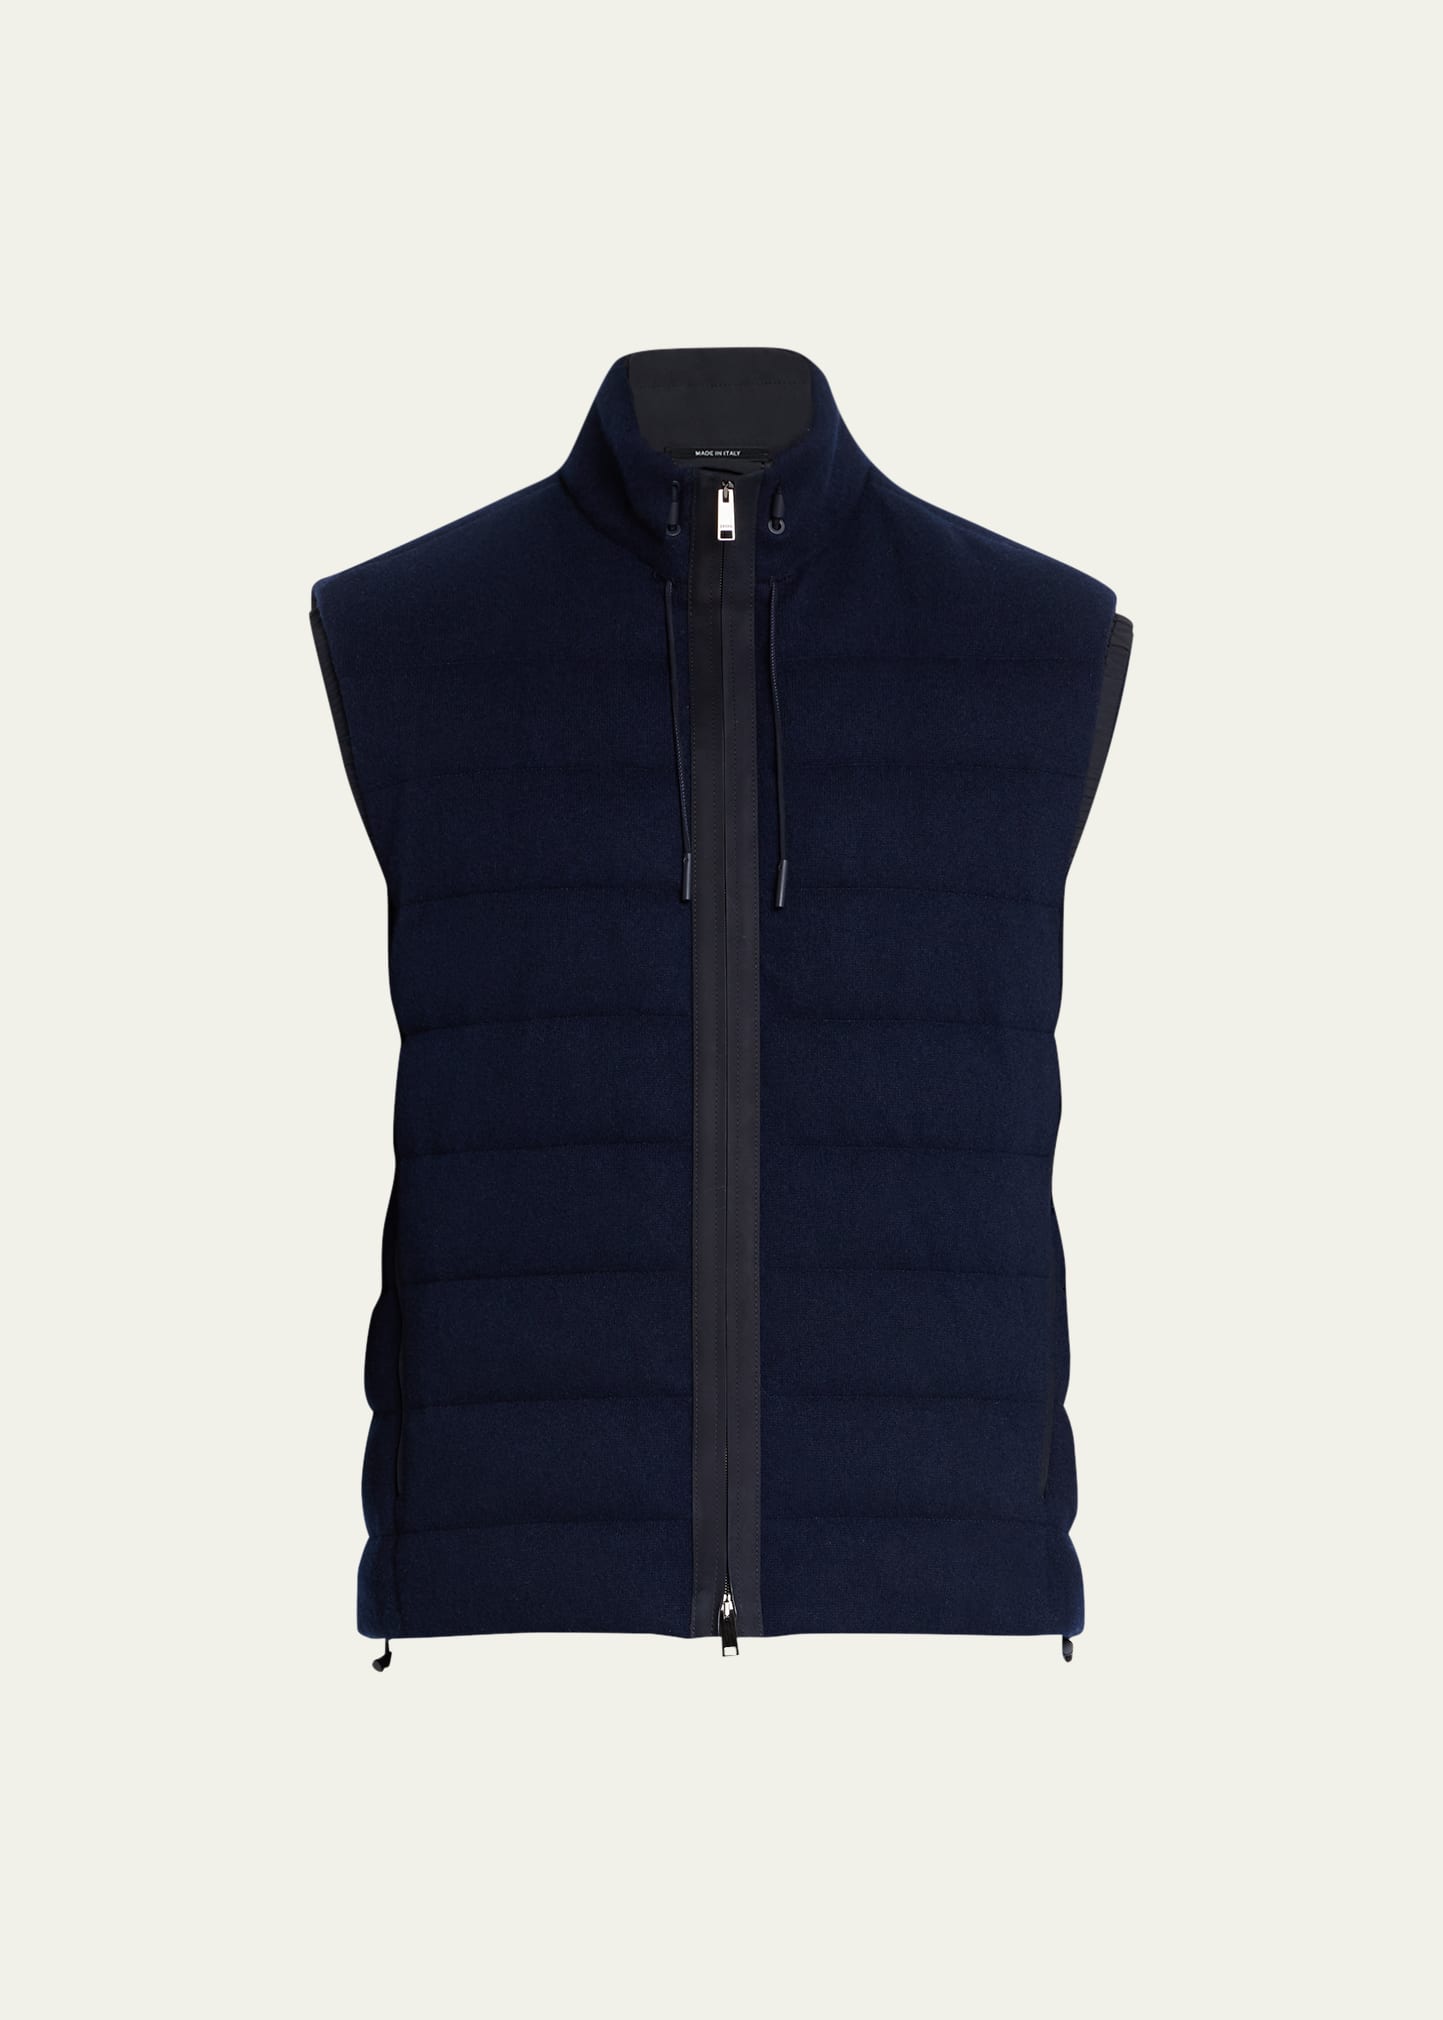 Zegna Men's Quilted Cashmere Full-zip Vest In Navy Sld